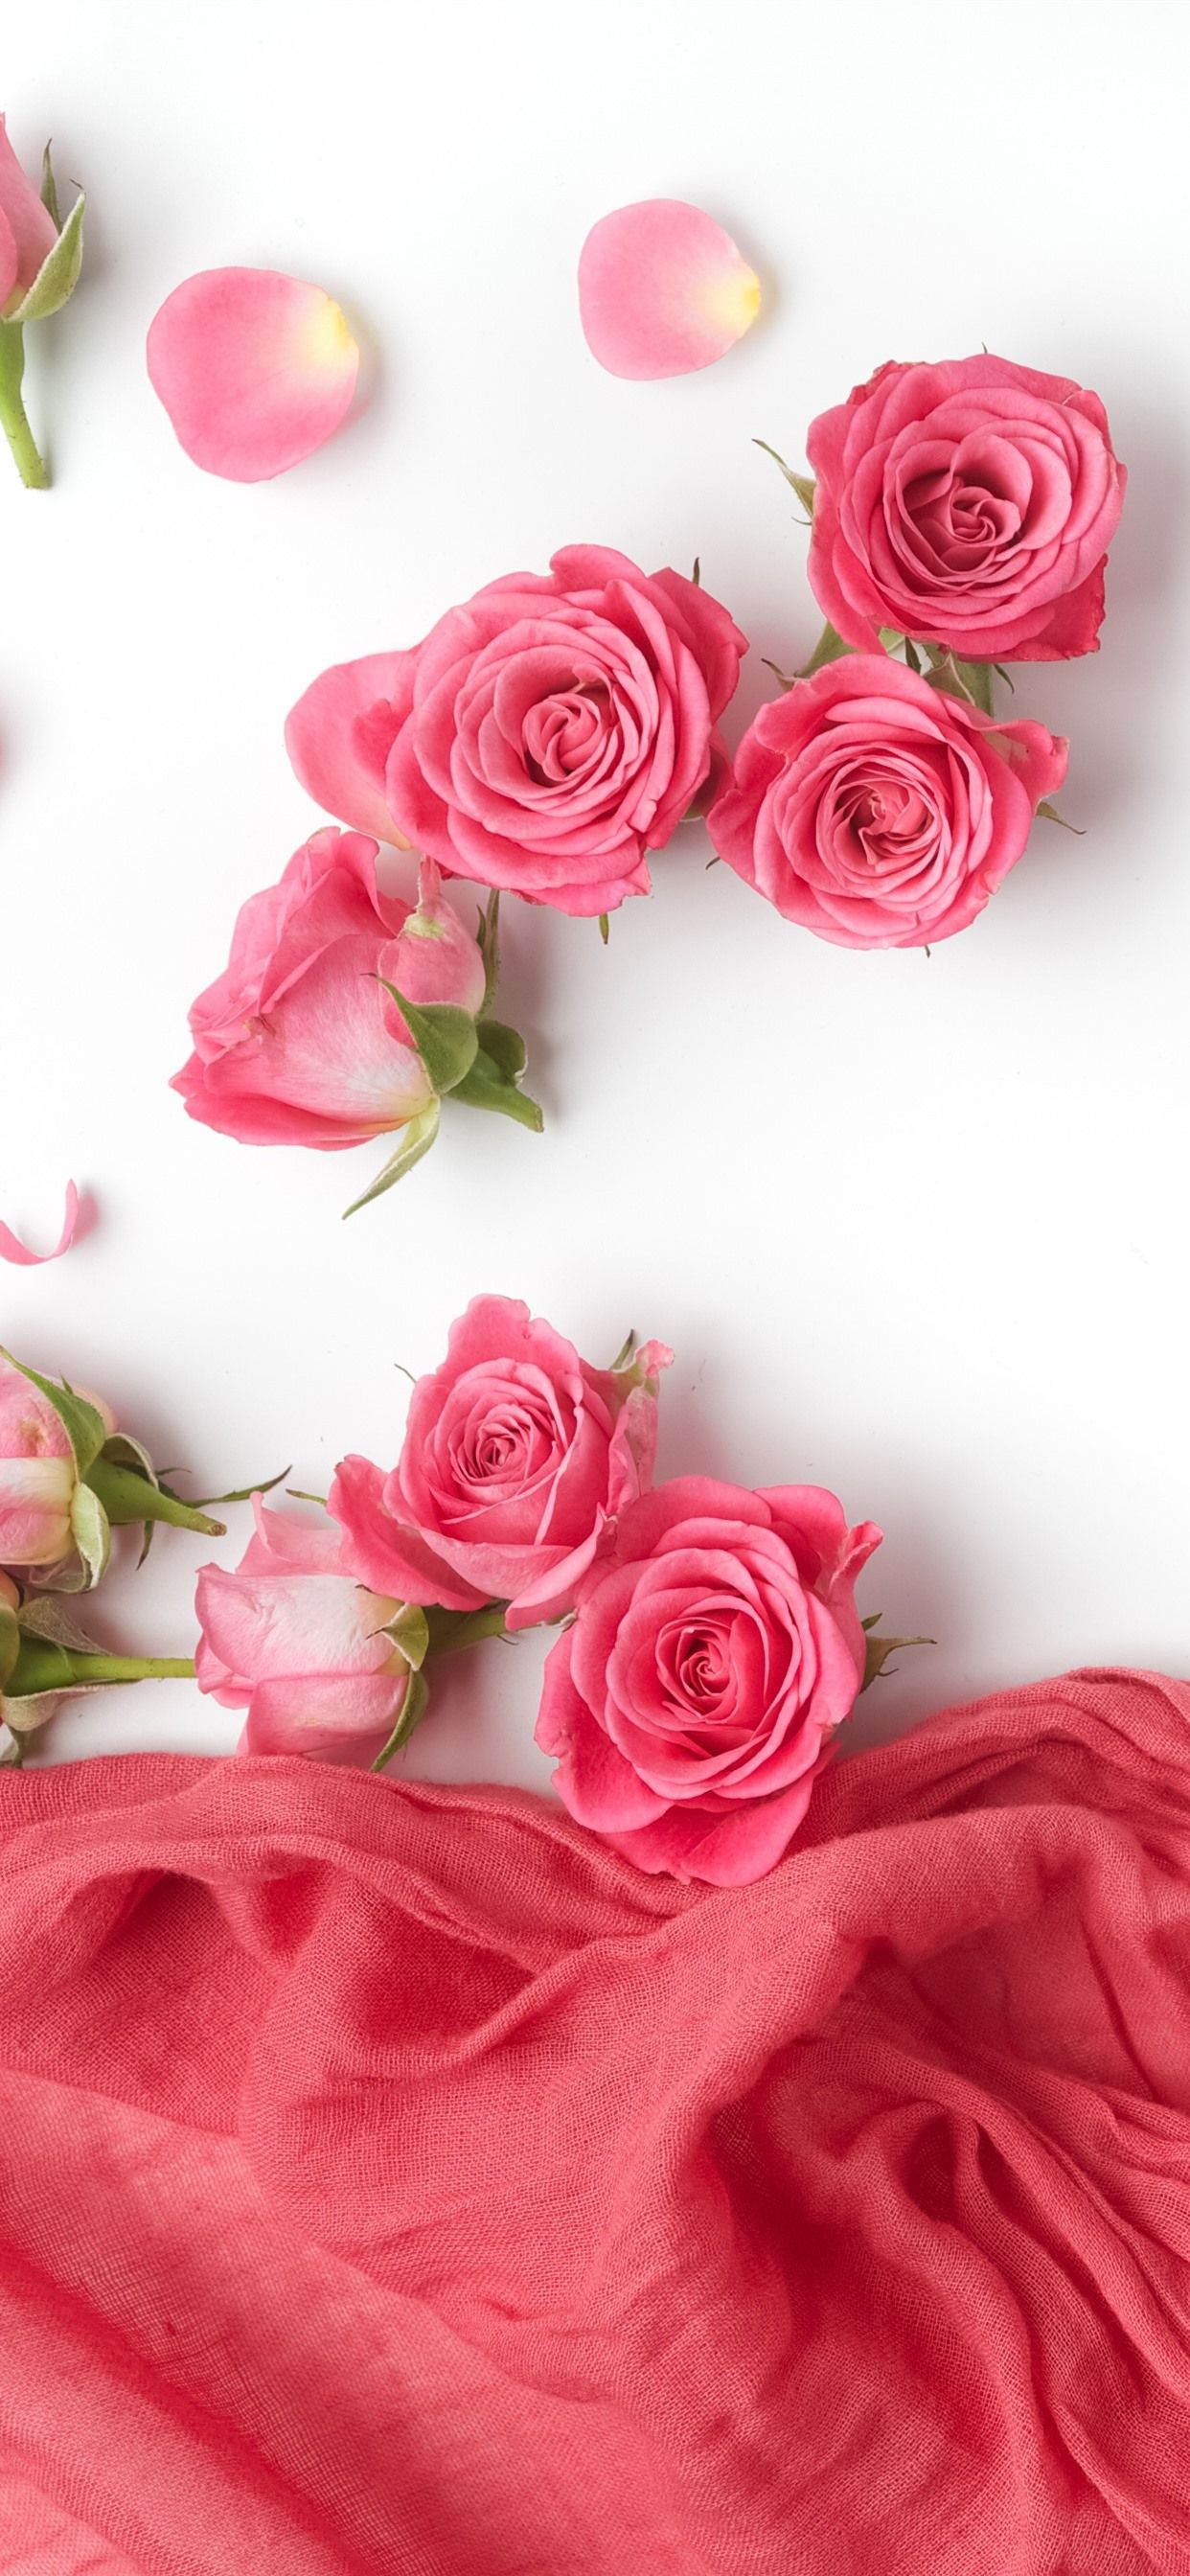 iPhone Wallpaper Pink Roses, Petals, Silk, White Background Rose Wallpaper White Background